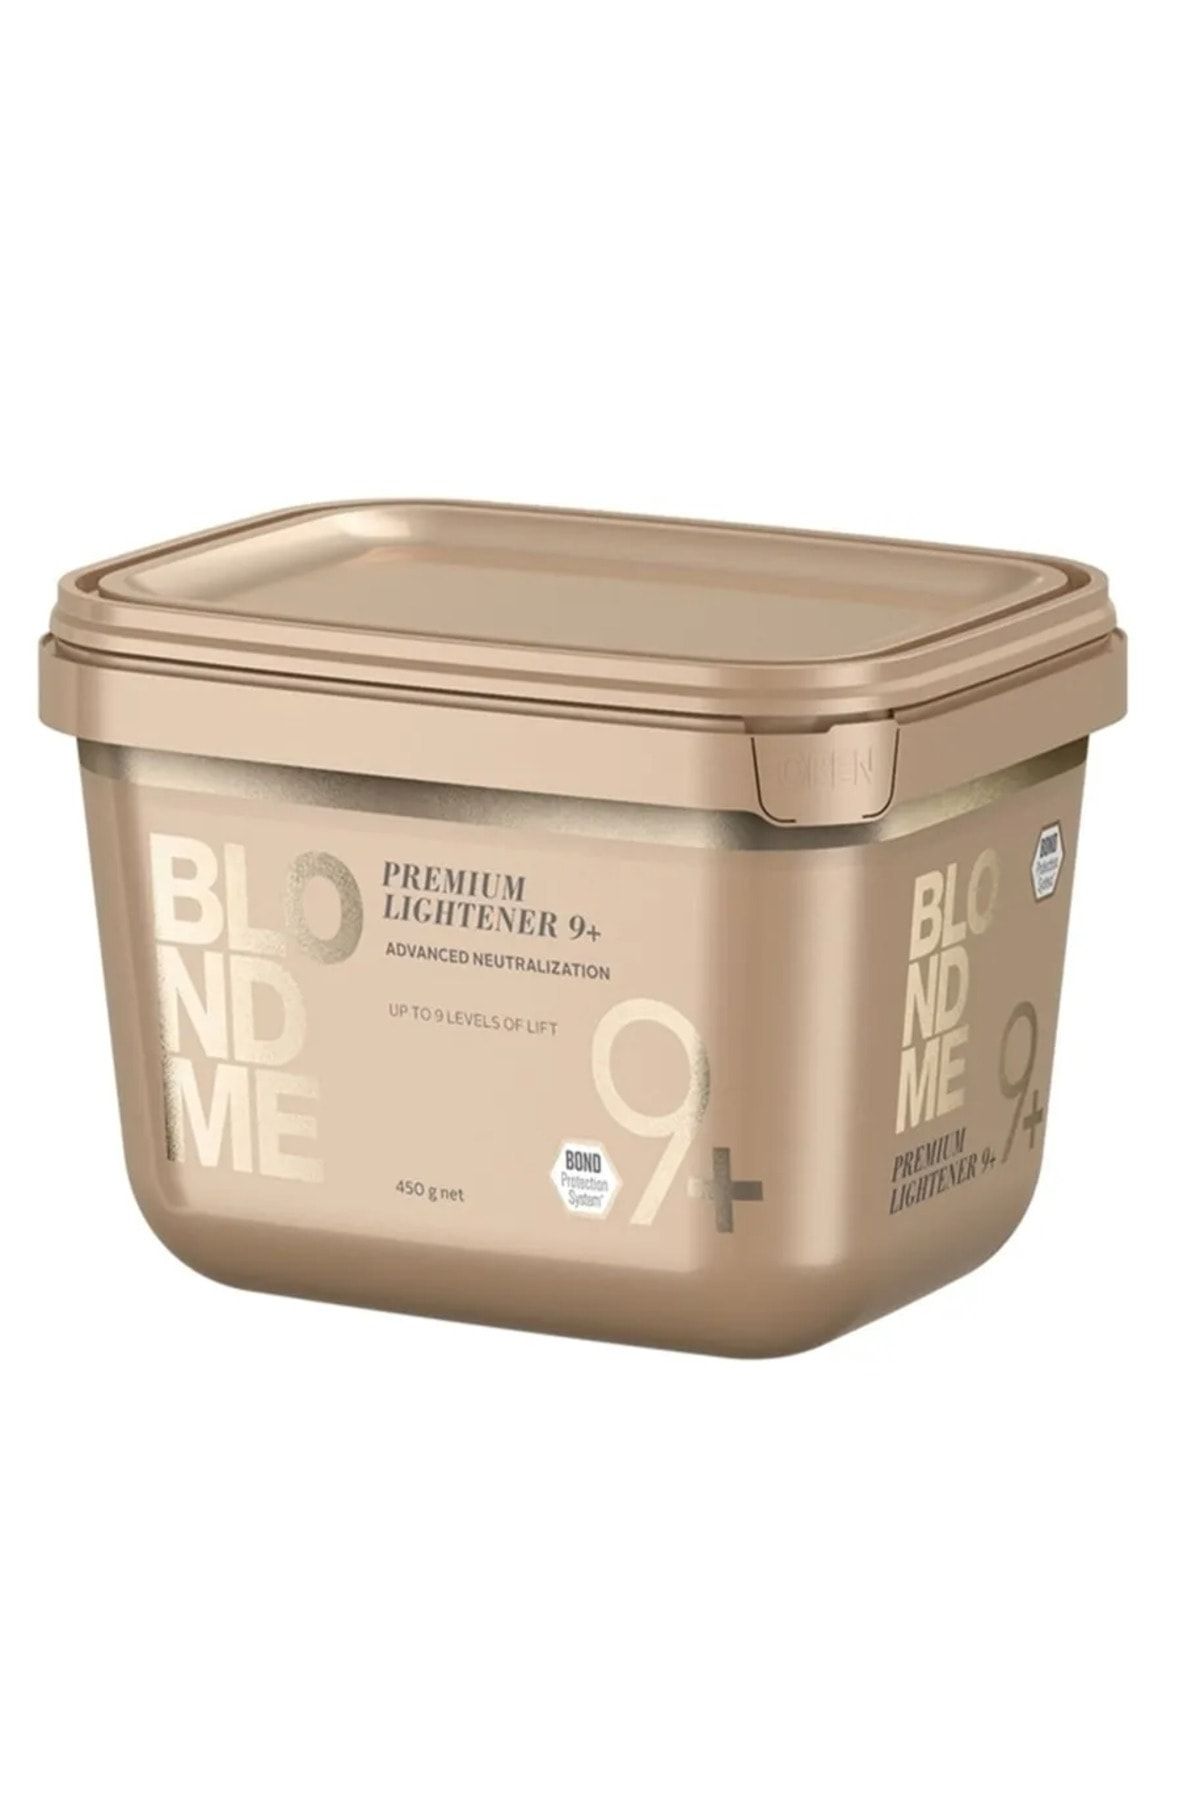 BLONDME Schwarzkopf Blond Me Açıcı Premium Lightener 9+